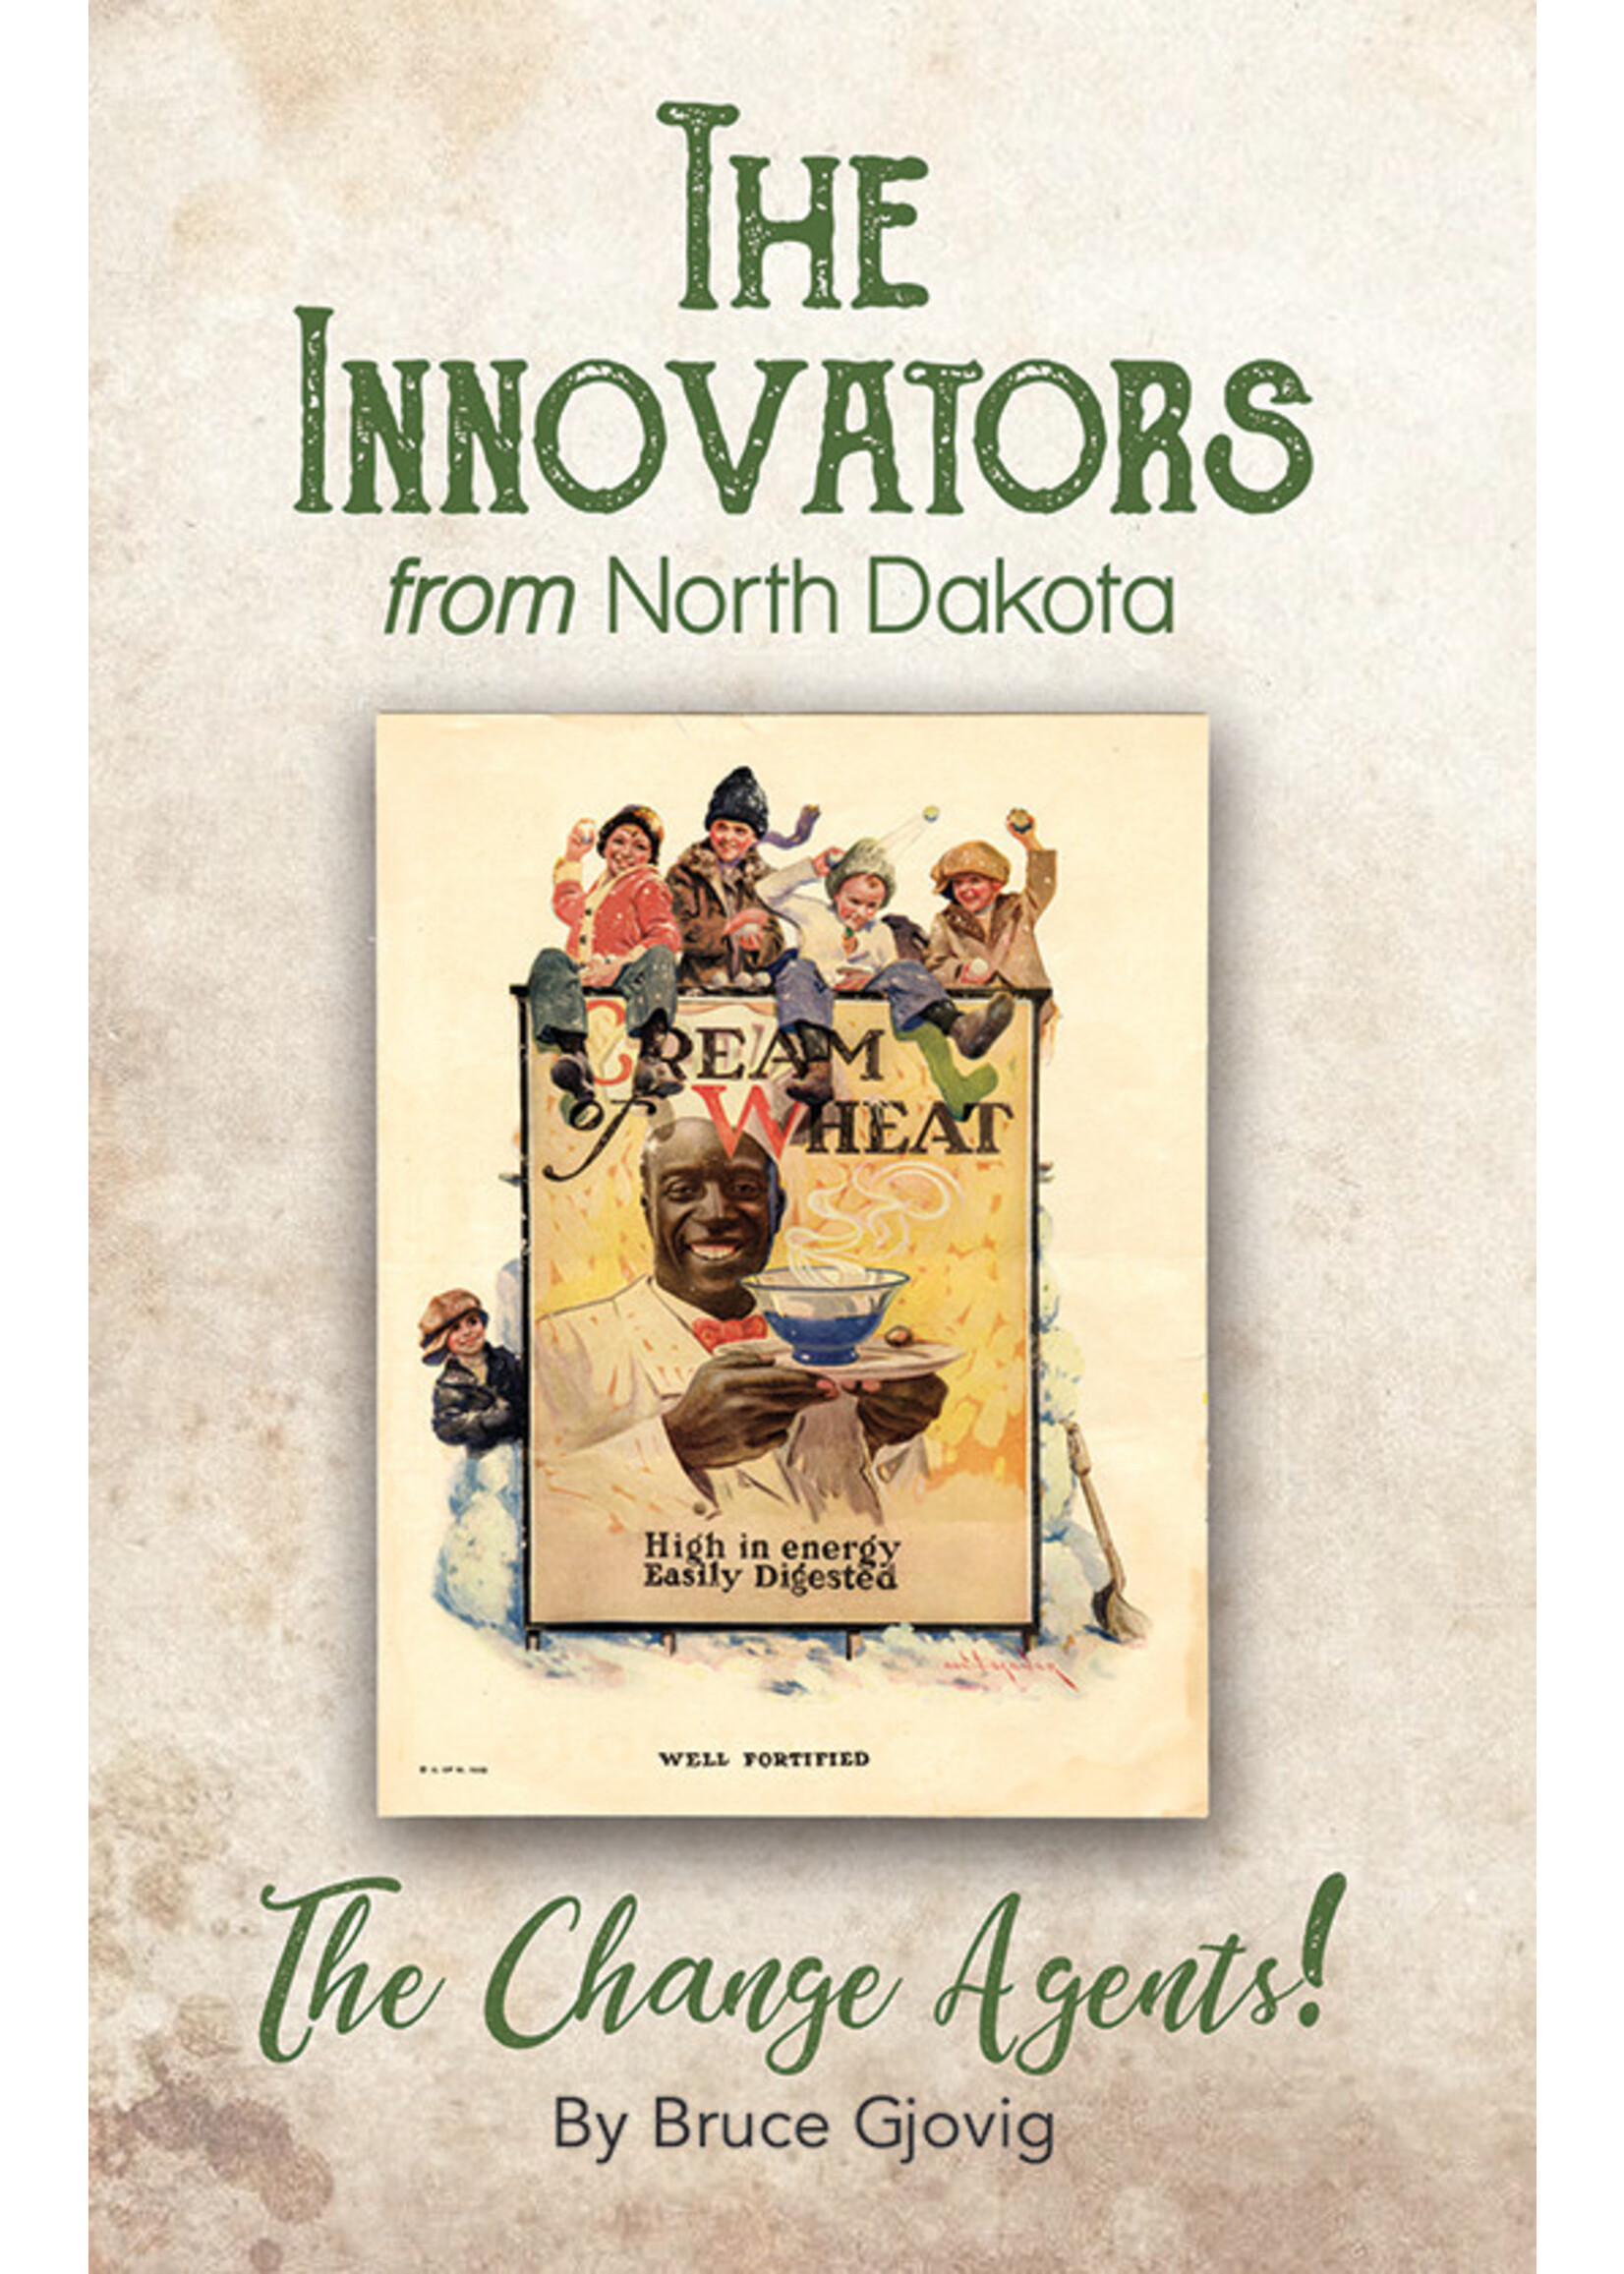 The Innovators From North Dakota